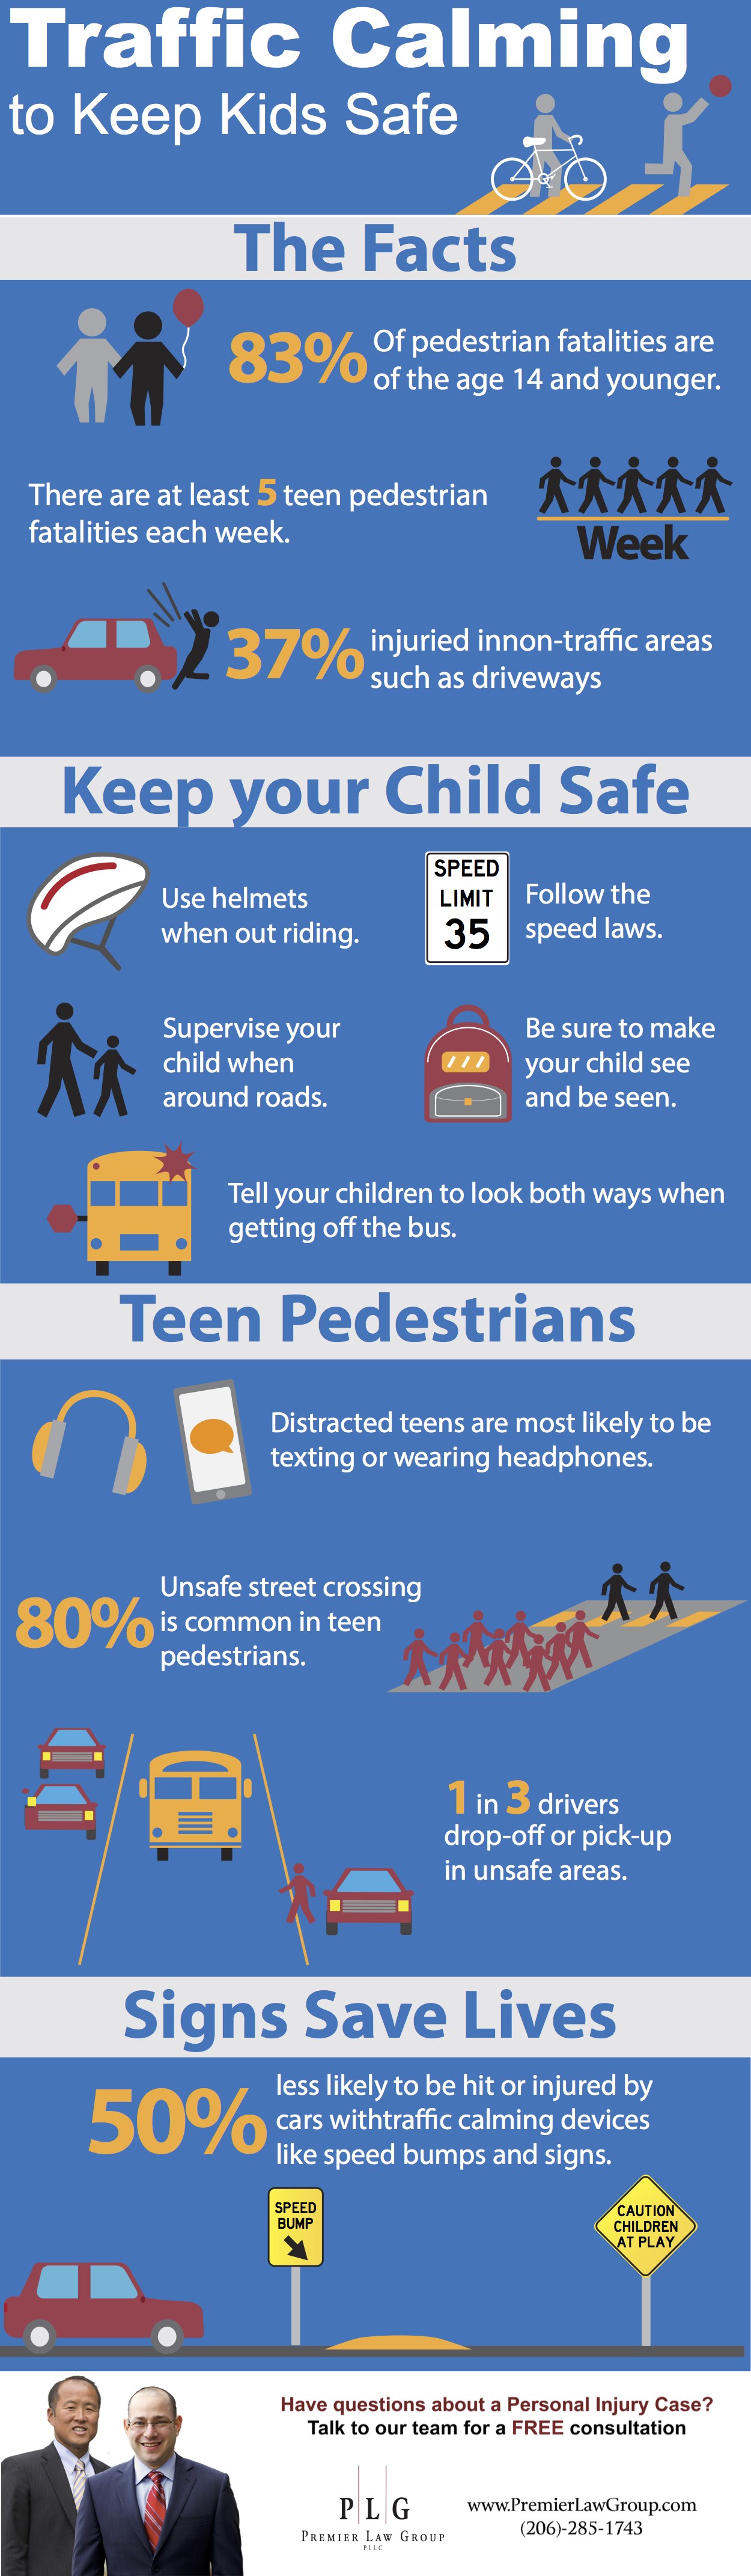 Keep Kids Safe Infographic